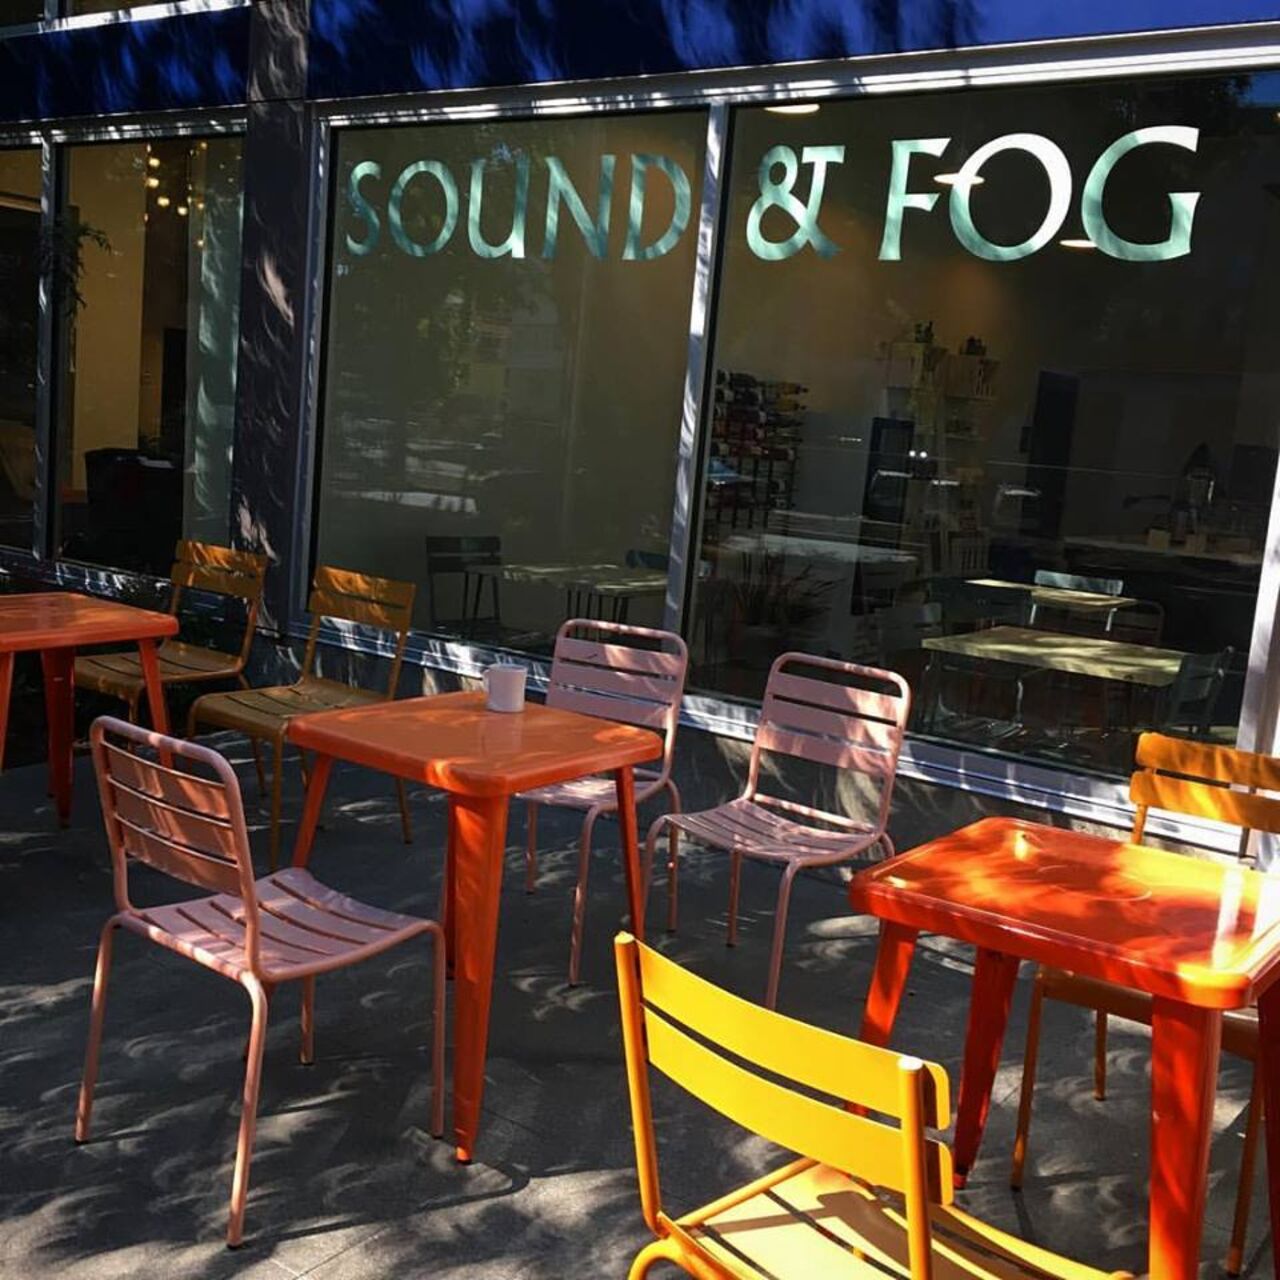 A photo of Sound & Fog